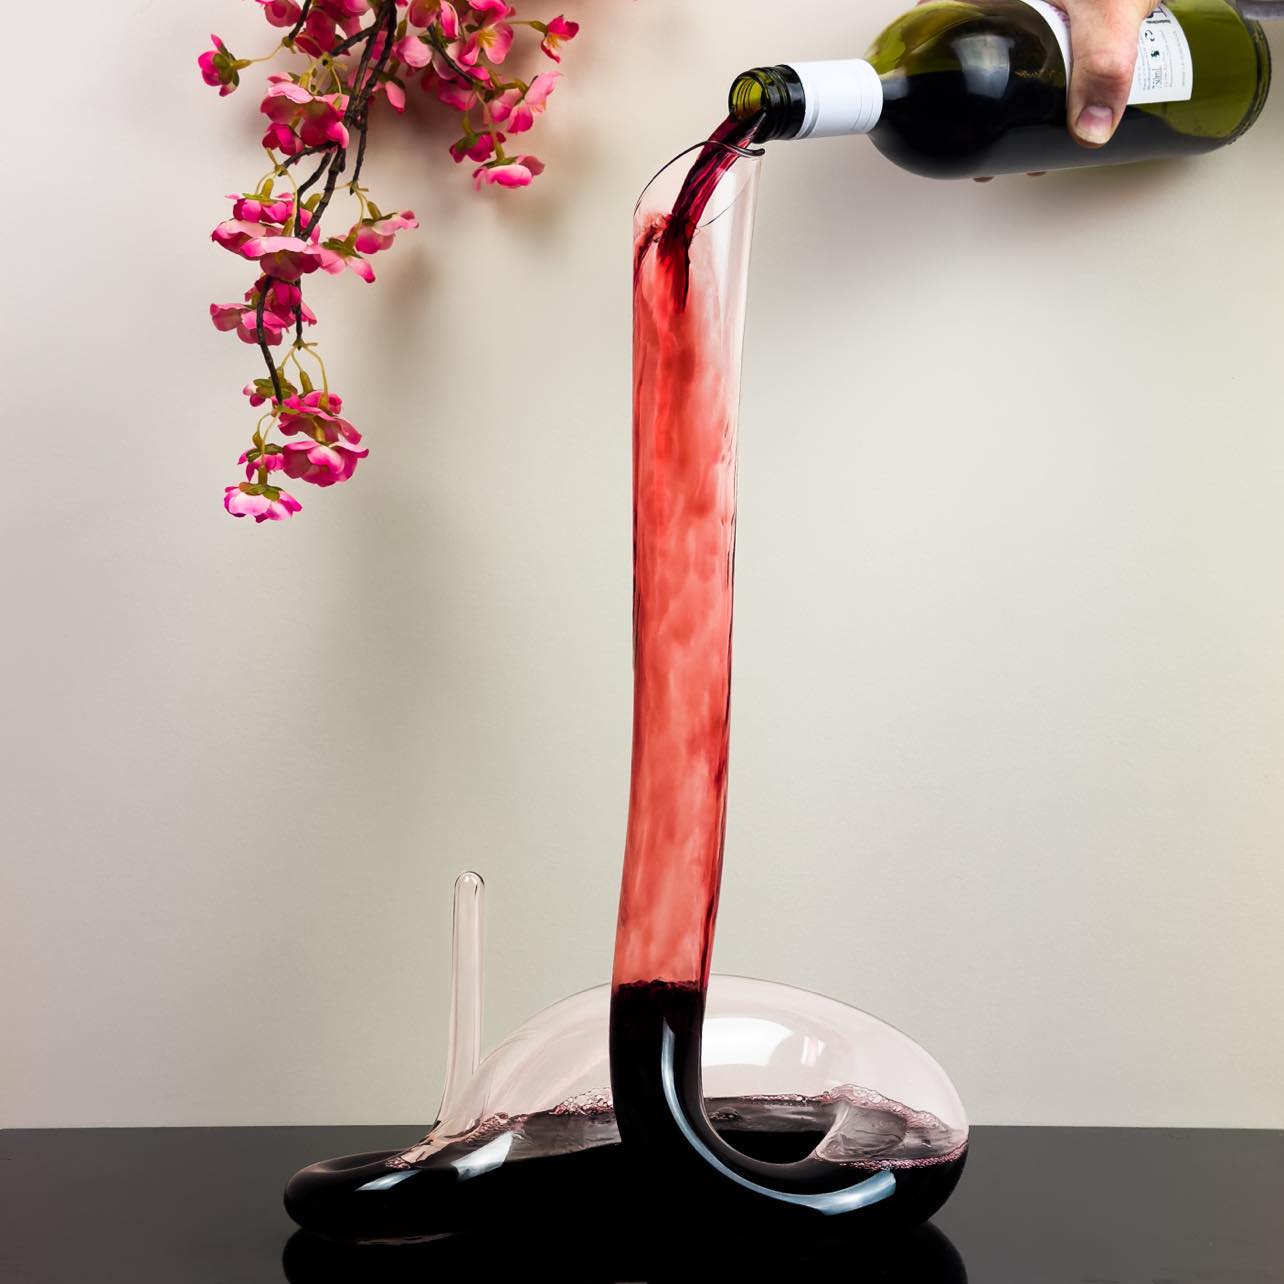 The Kato Wine Decanter - Solkatt Designs 